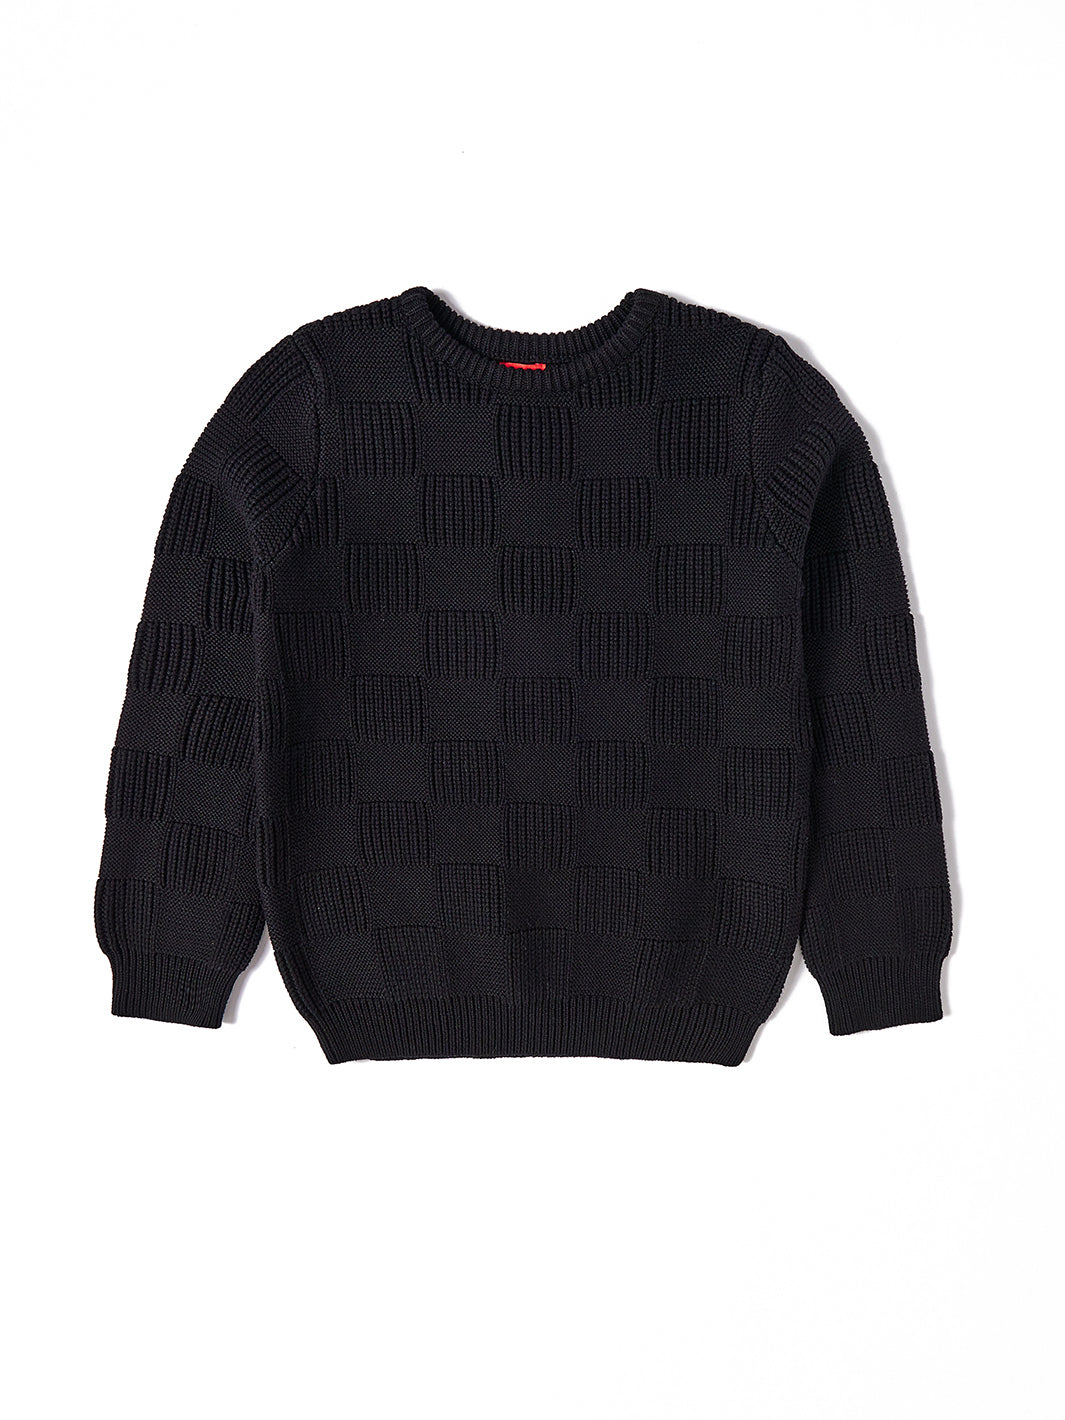 Square Knit Sweater - Black